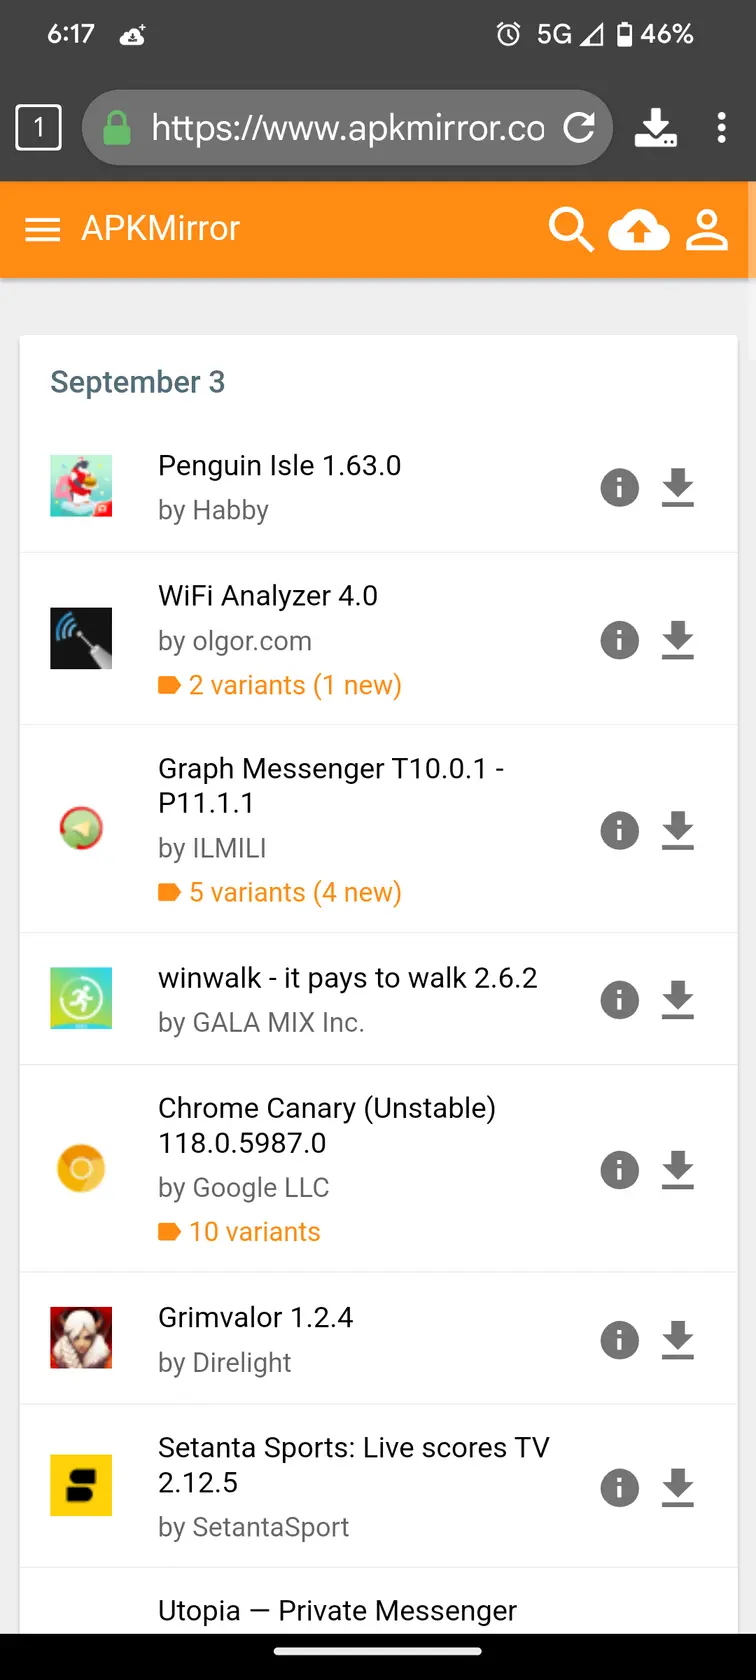 Google Play Store 2023 APK- Download